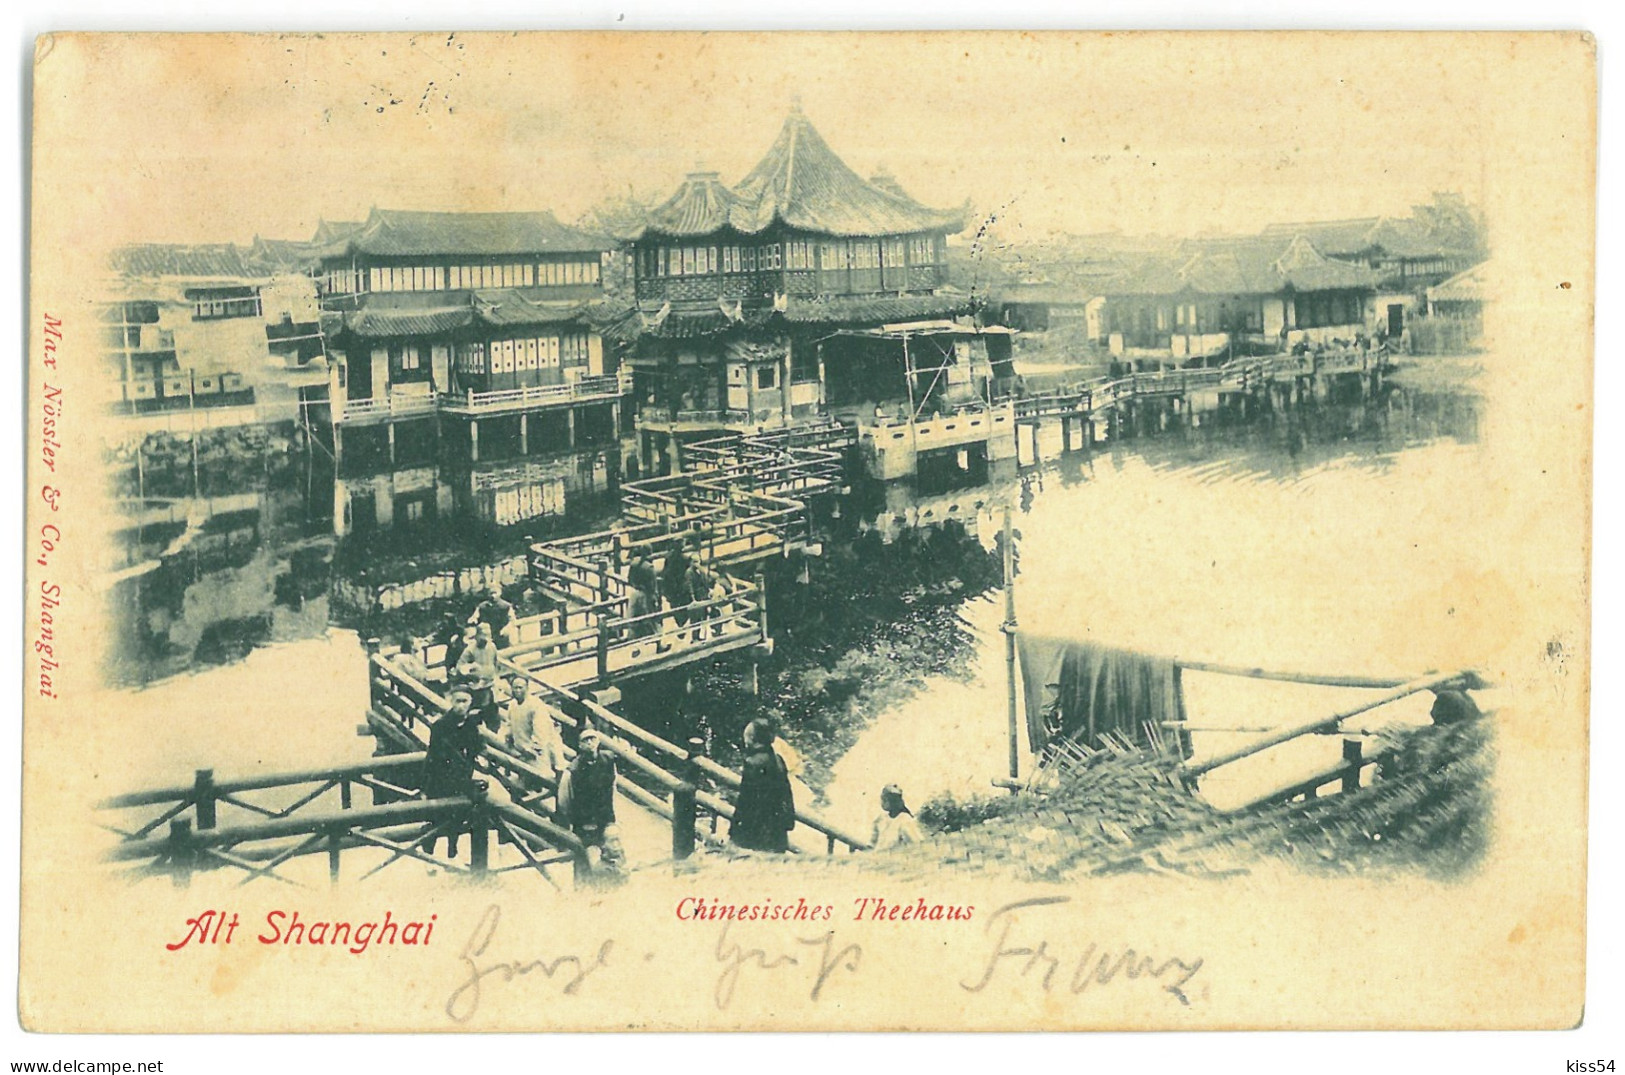 CH 12 - 23900 SHANGHAI, Teahouse, Litho, China - Old Postcard - Used - 1900 - Chine